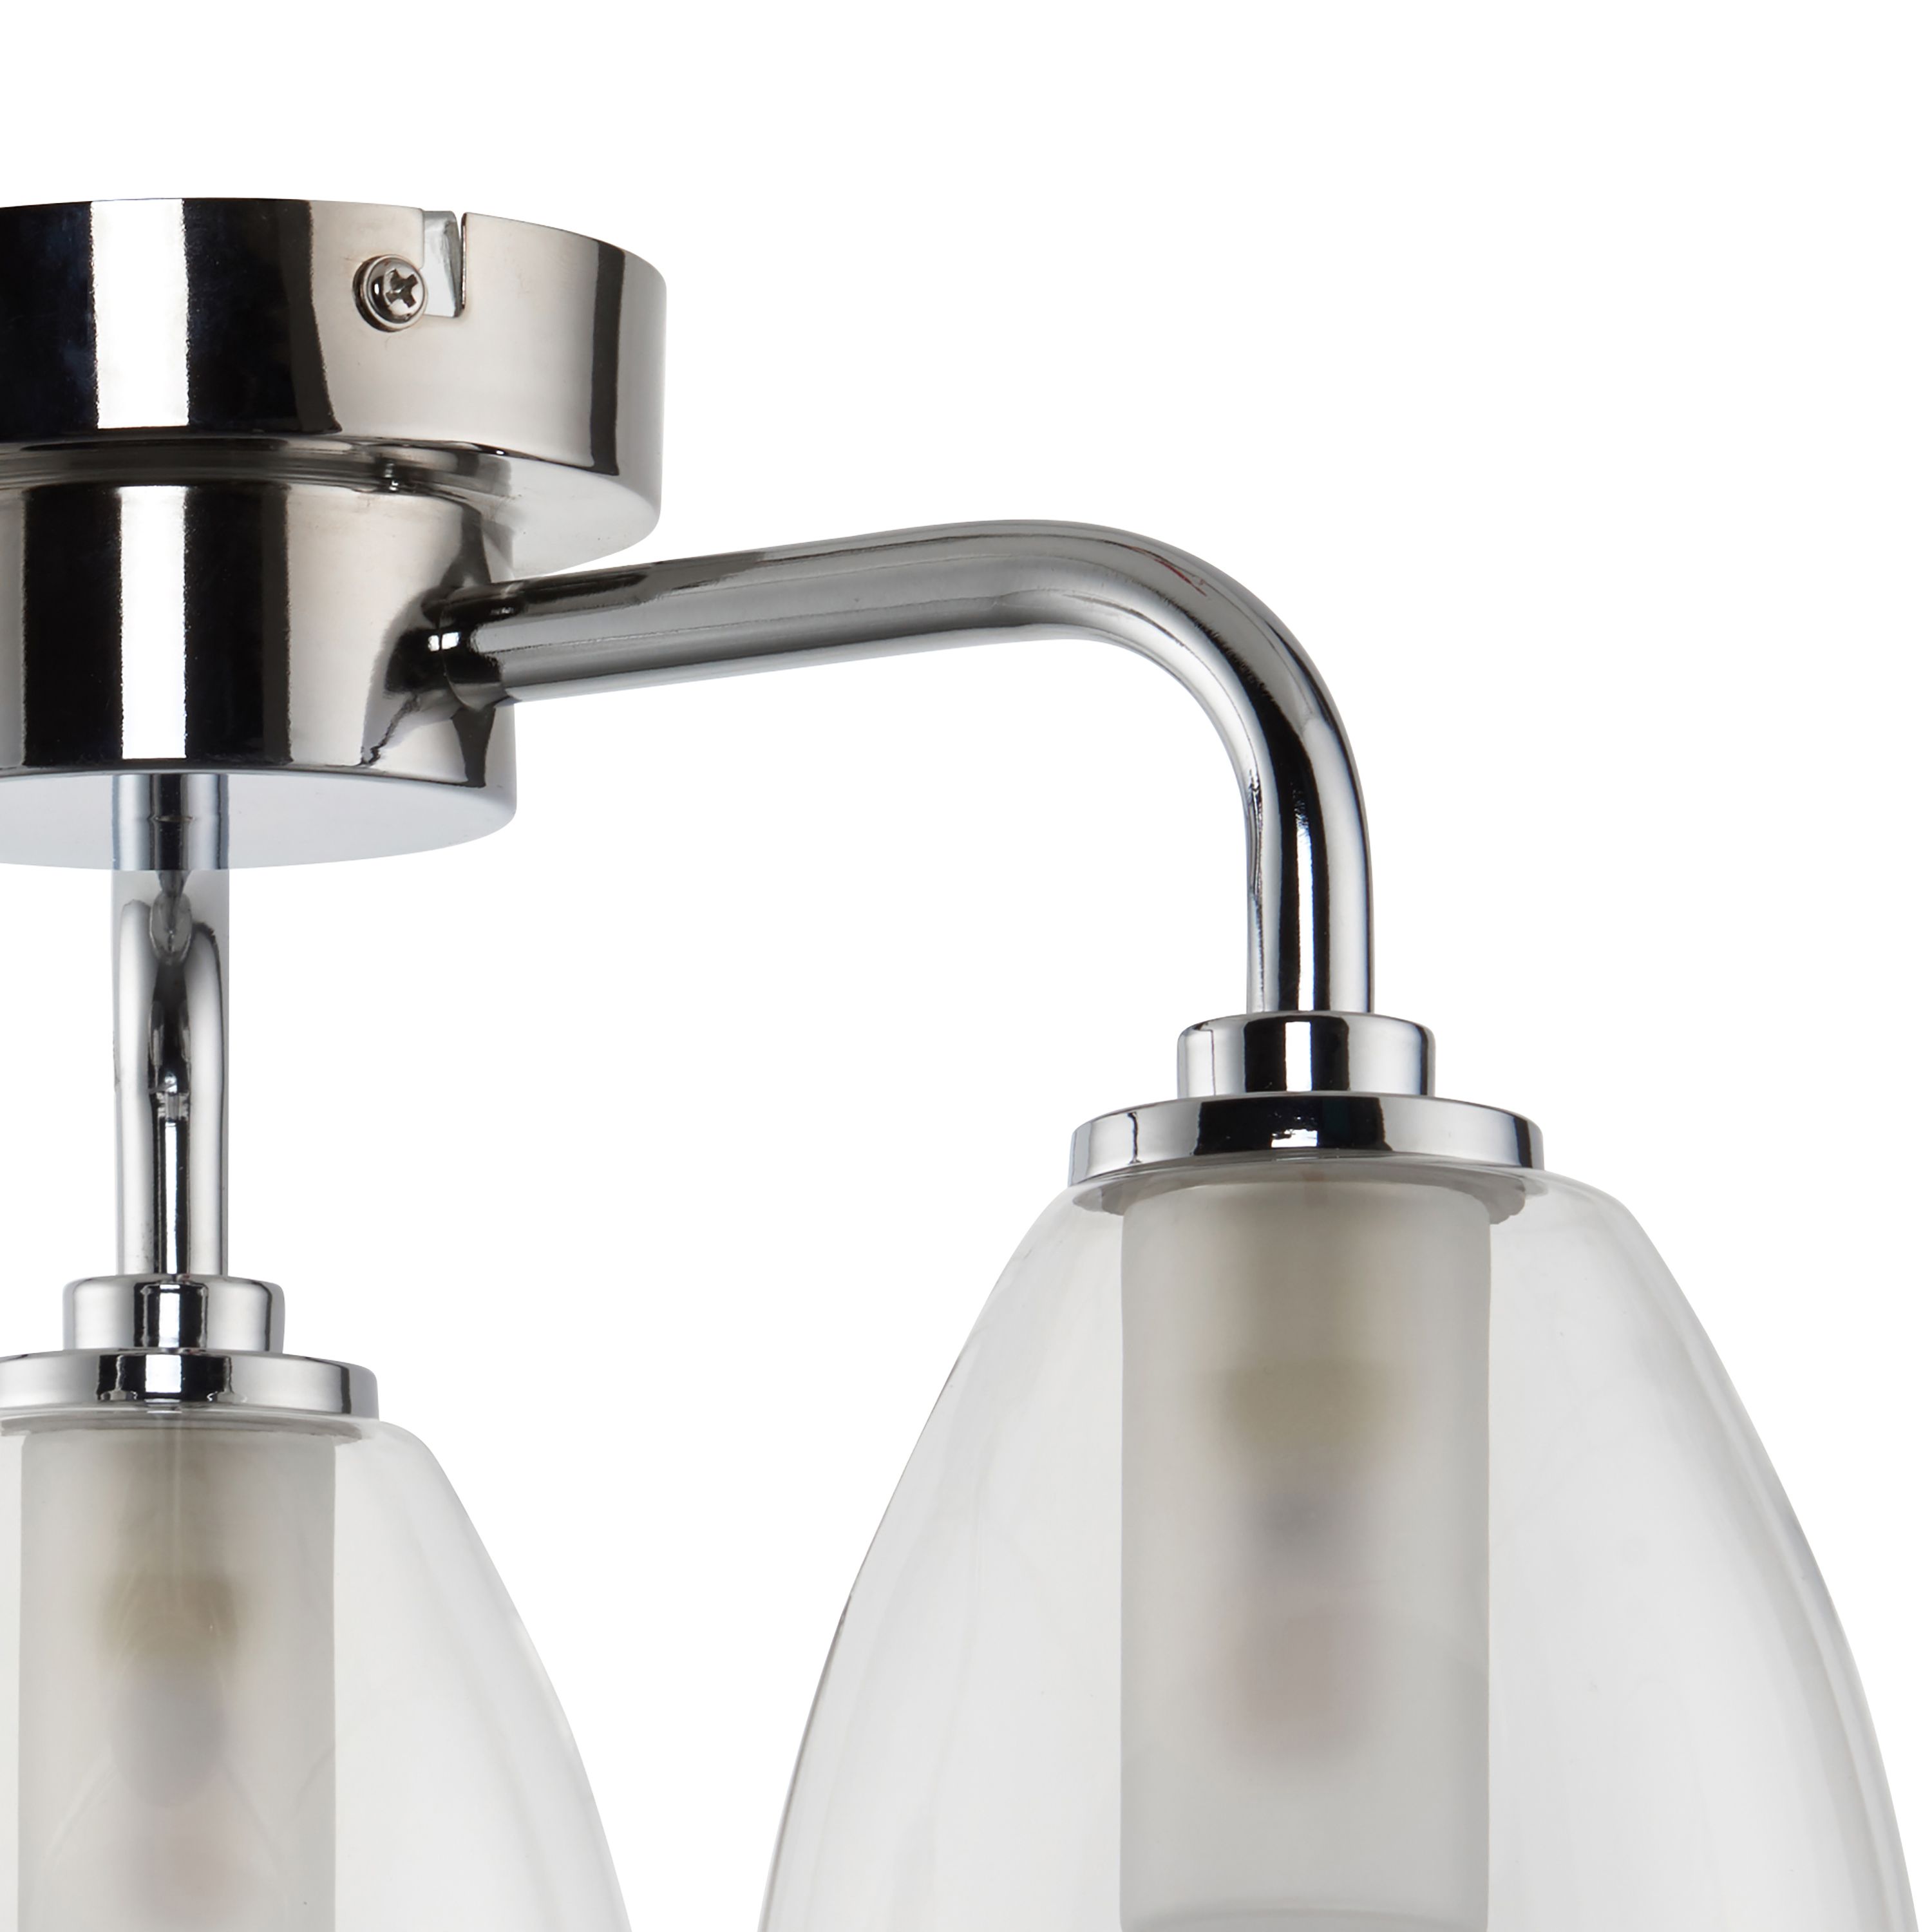 GoodHome Carisi Glass & metal Chrome effect 3 Lamp Bathroom Ceiling light